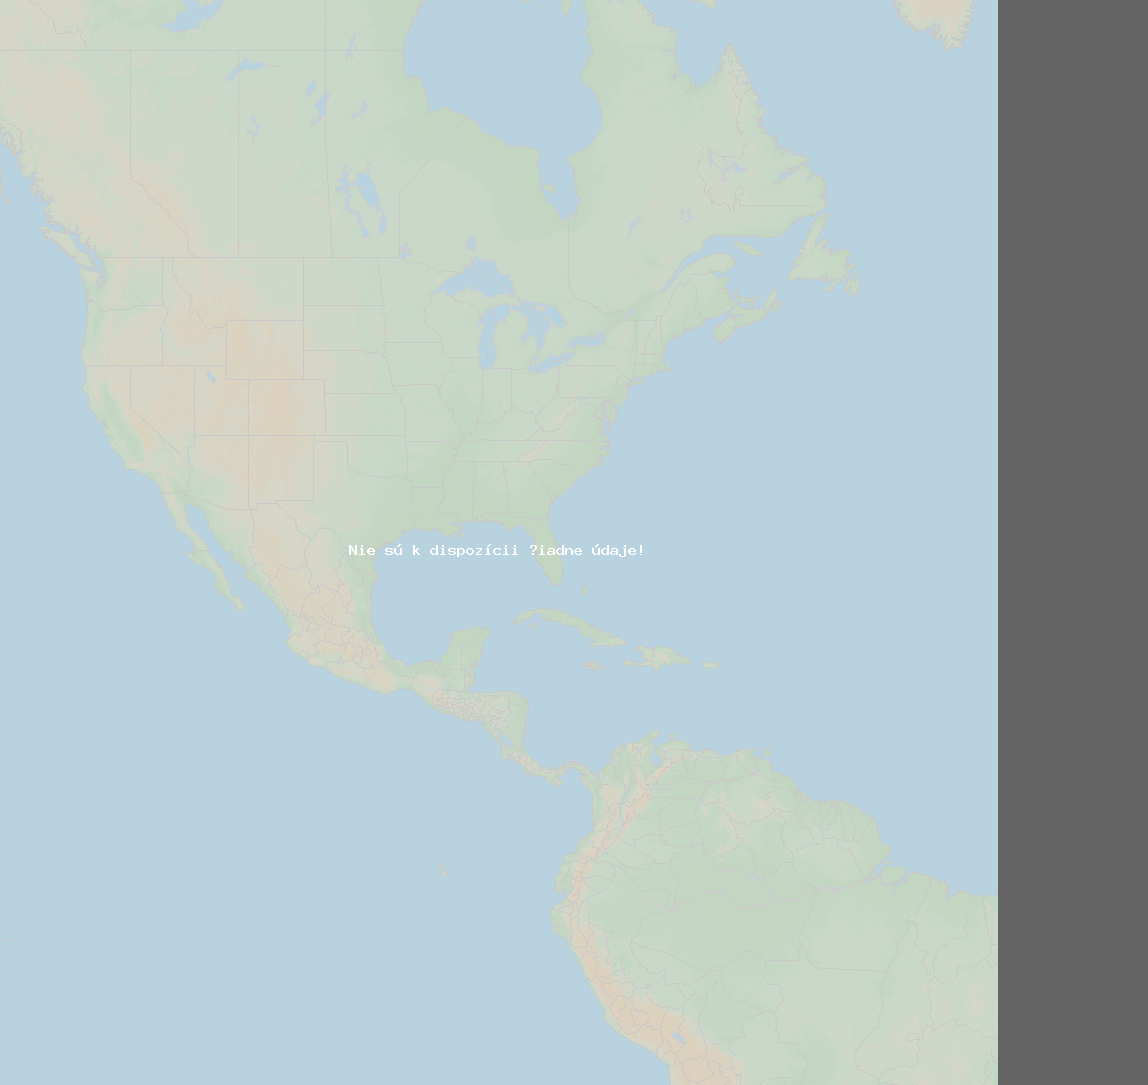 Pomer bleskov (Stanica Lawrence-Dade2) North America 2019 Marec